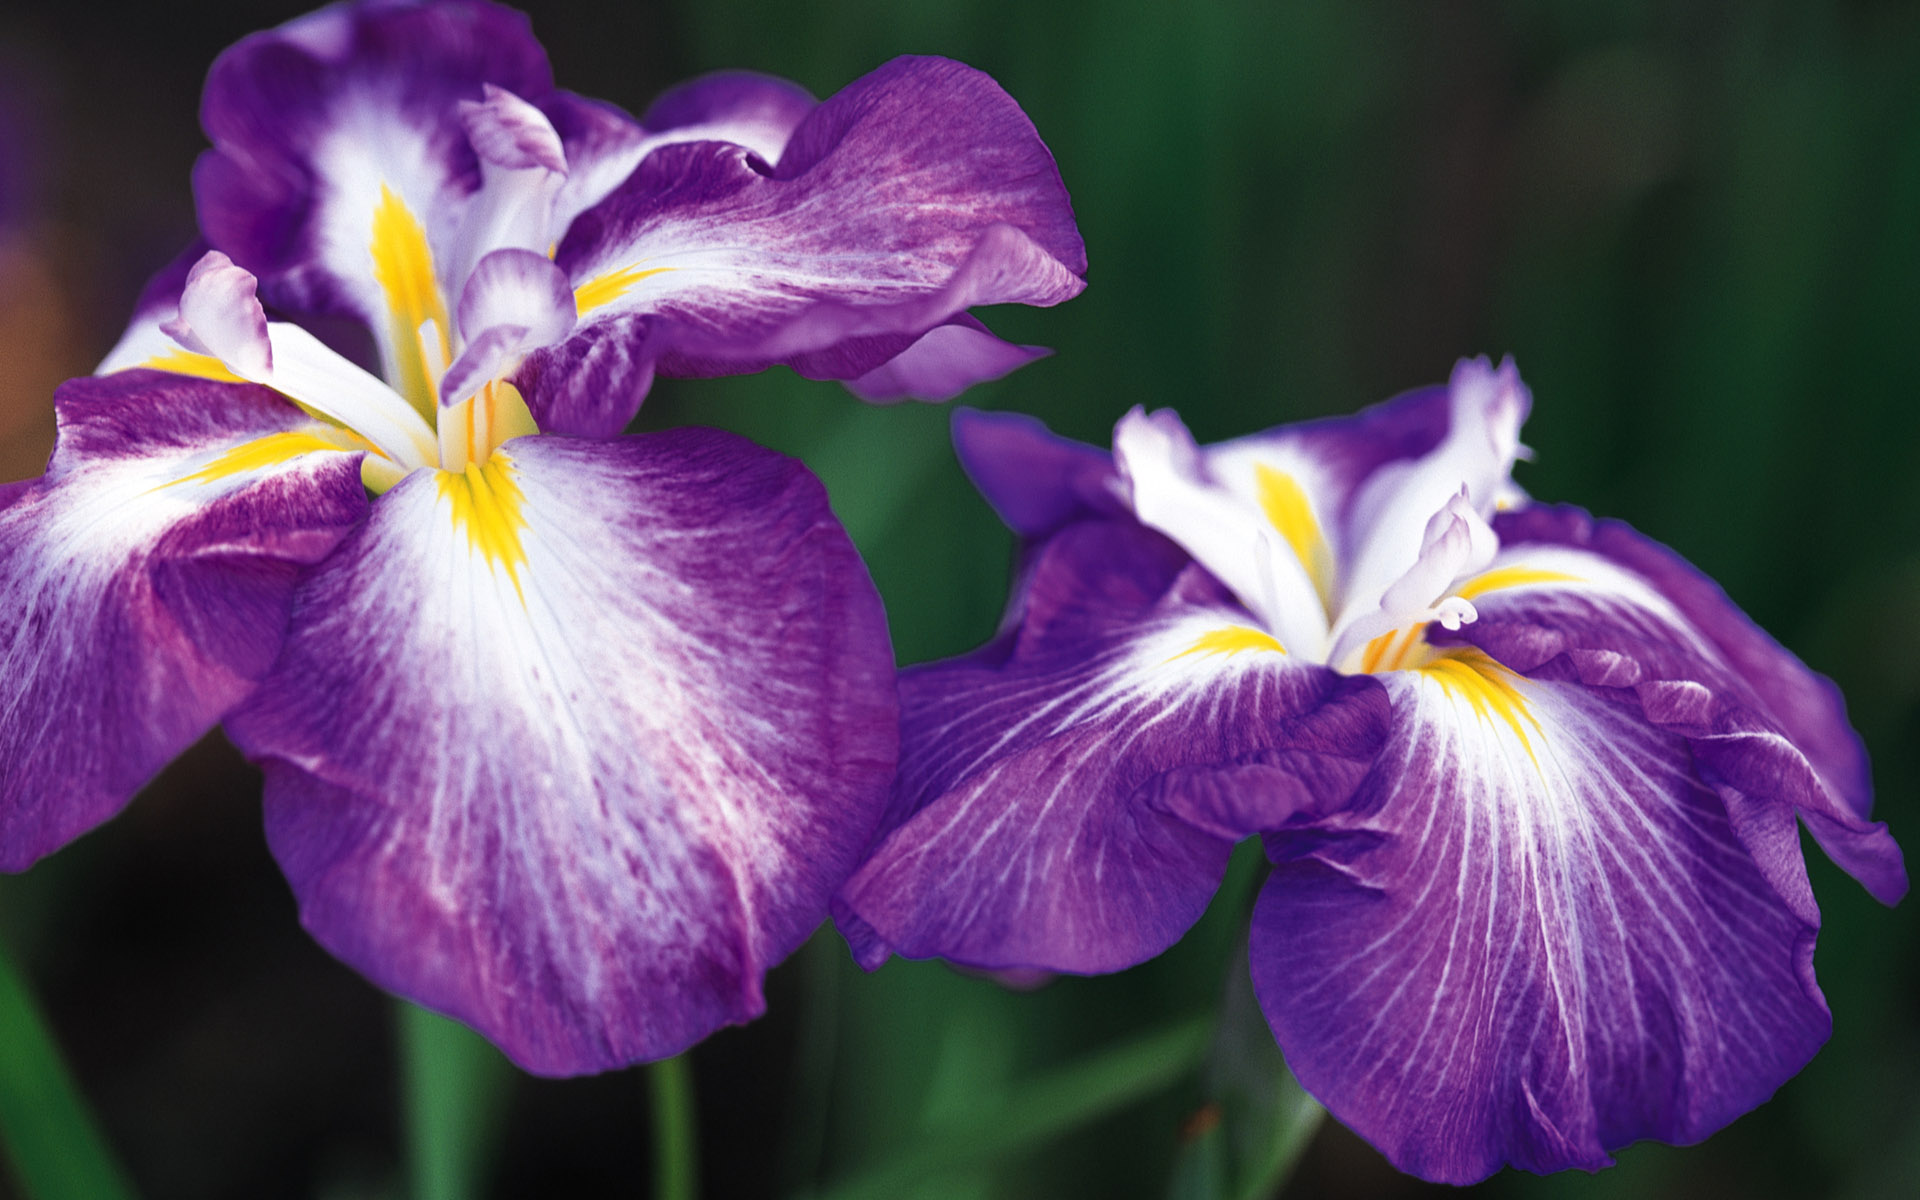 310629 descargar imagen tierra/naturaleza, iris, flor, flores: fondos de pantalla y protectores de pantalla gratis